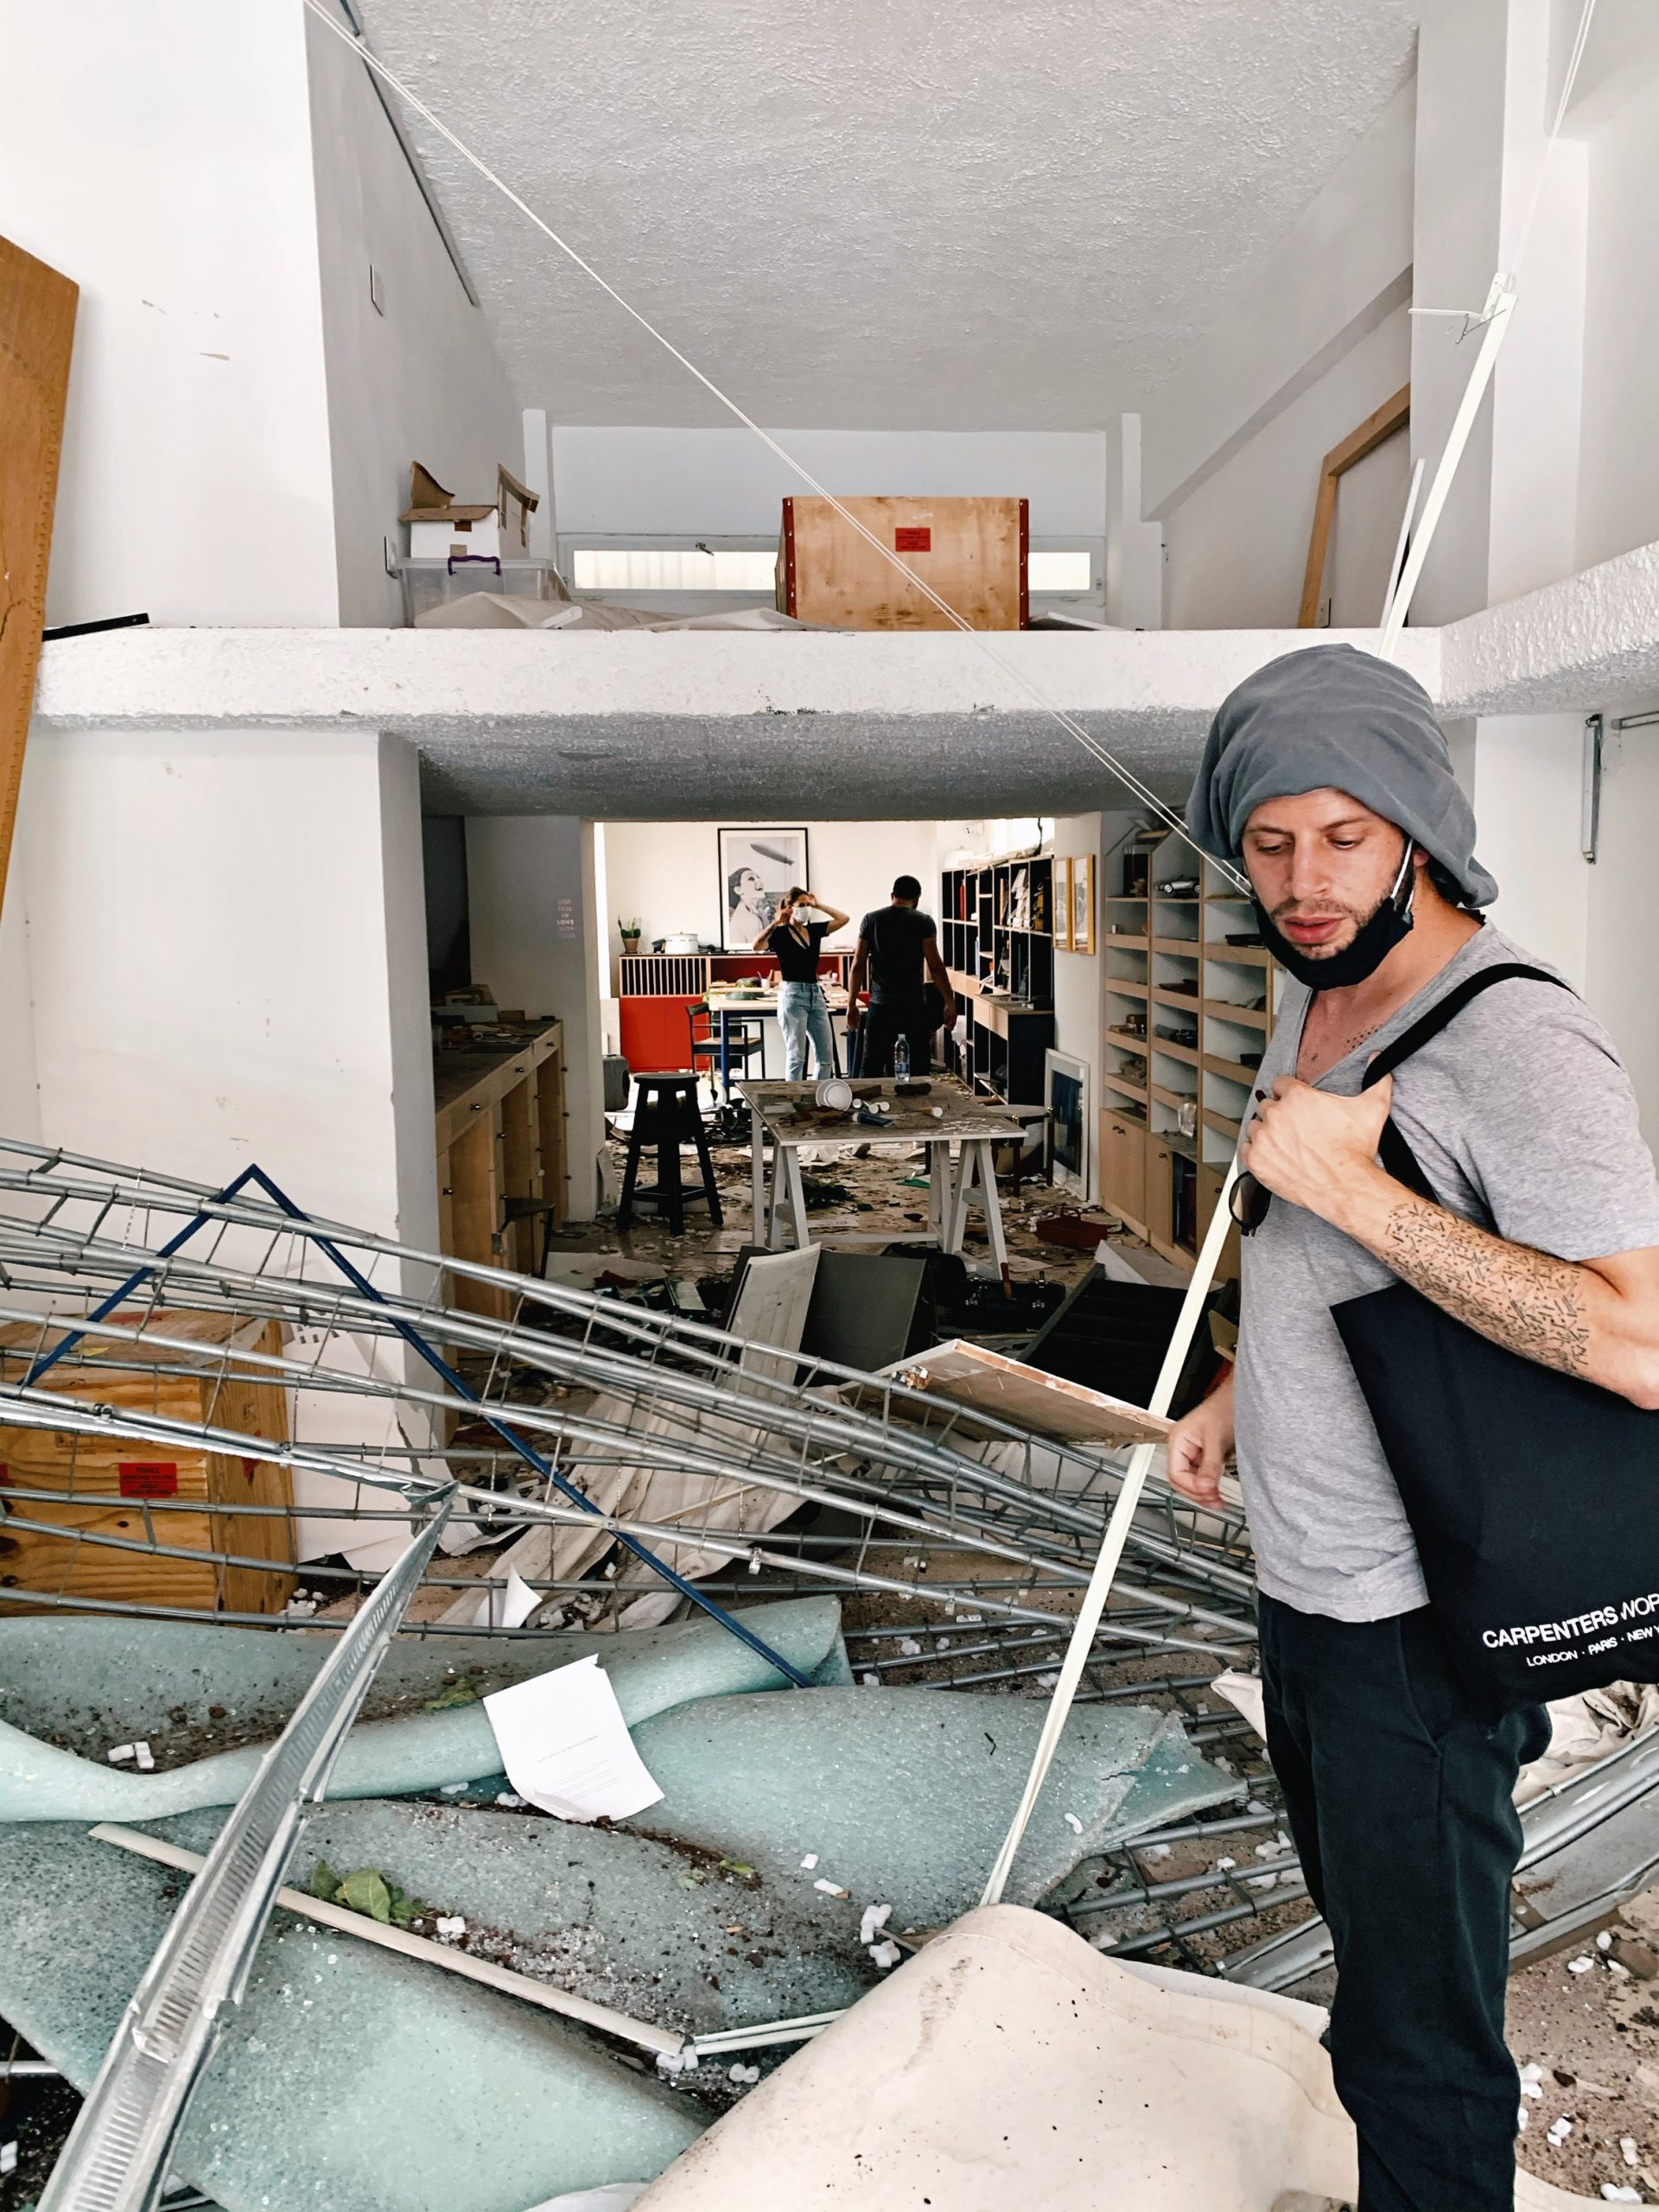 David/Nicolas studio after the explosion in Beirut